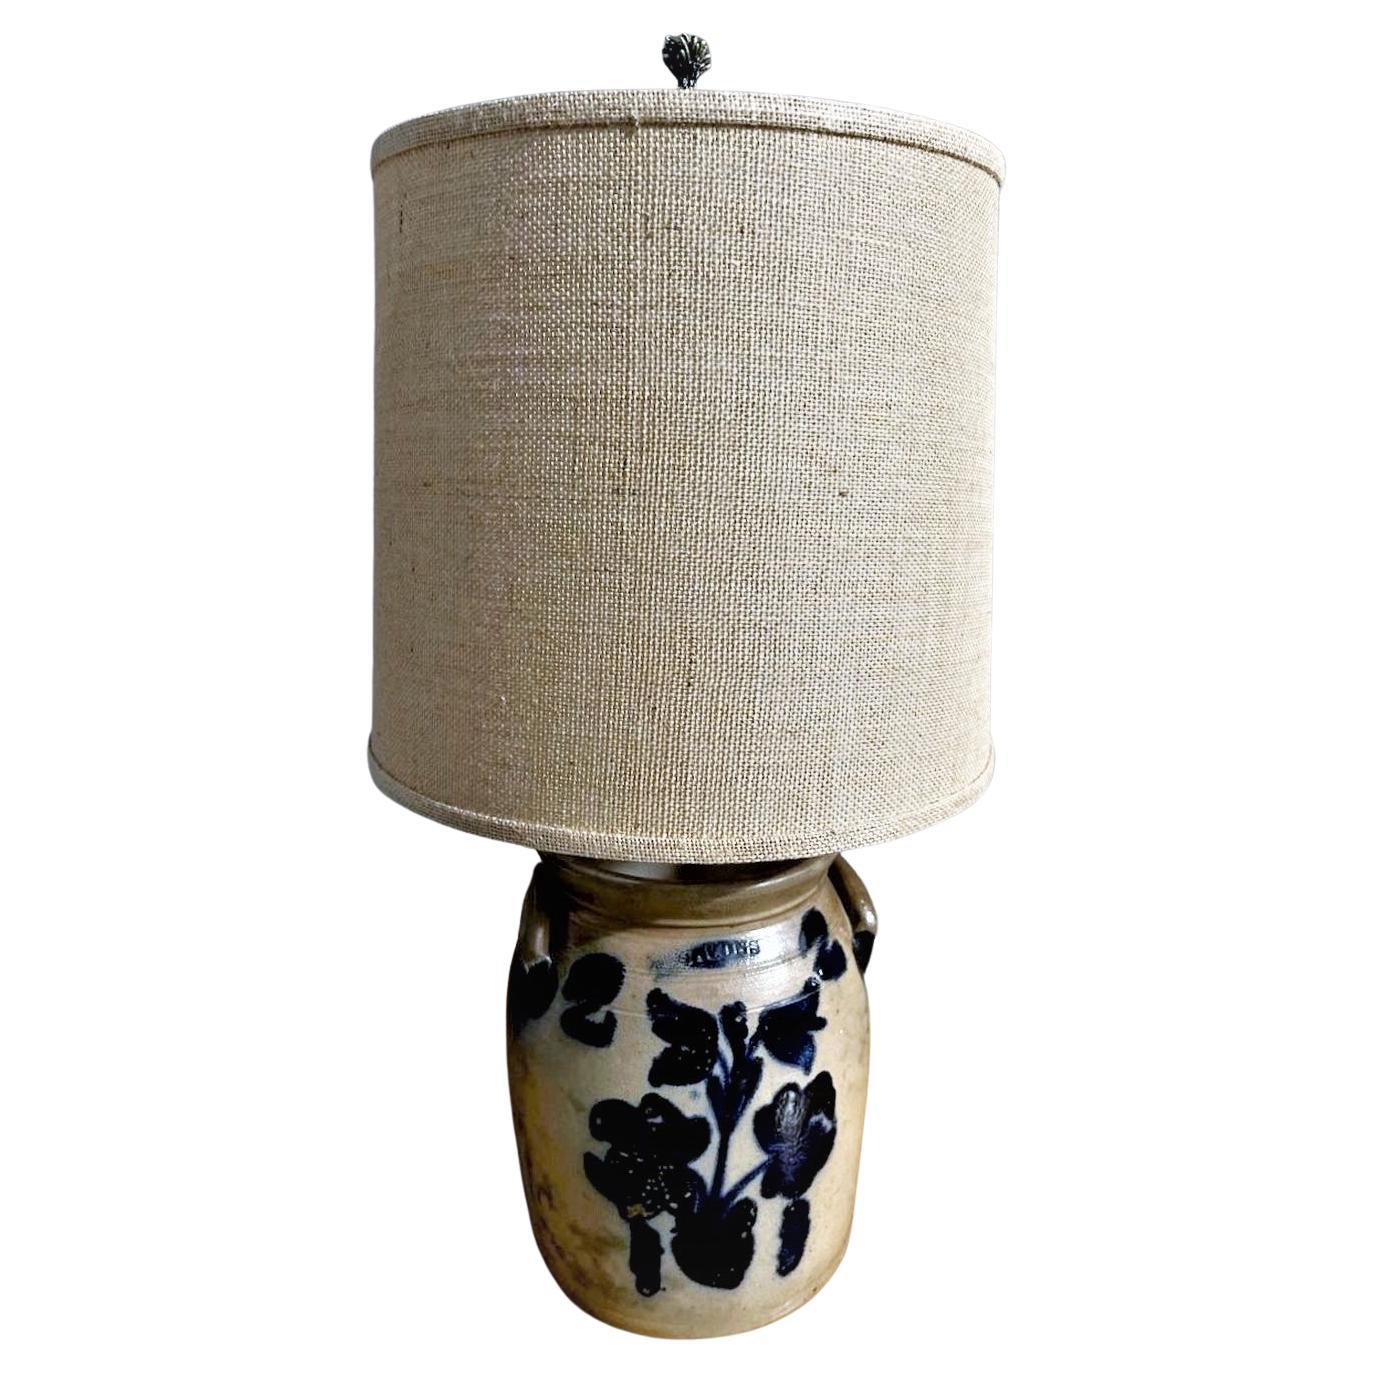 19thc Decorated Stoneware Lamp